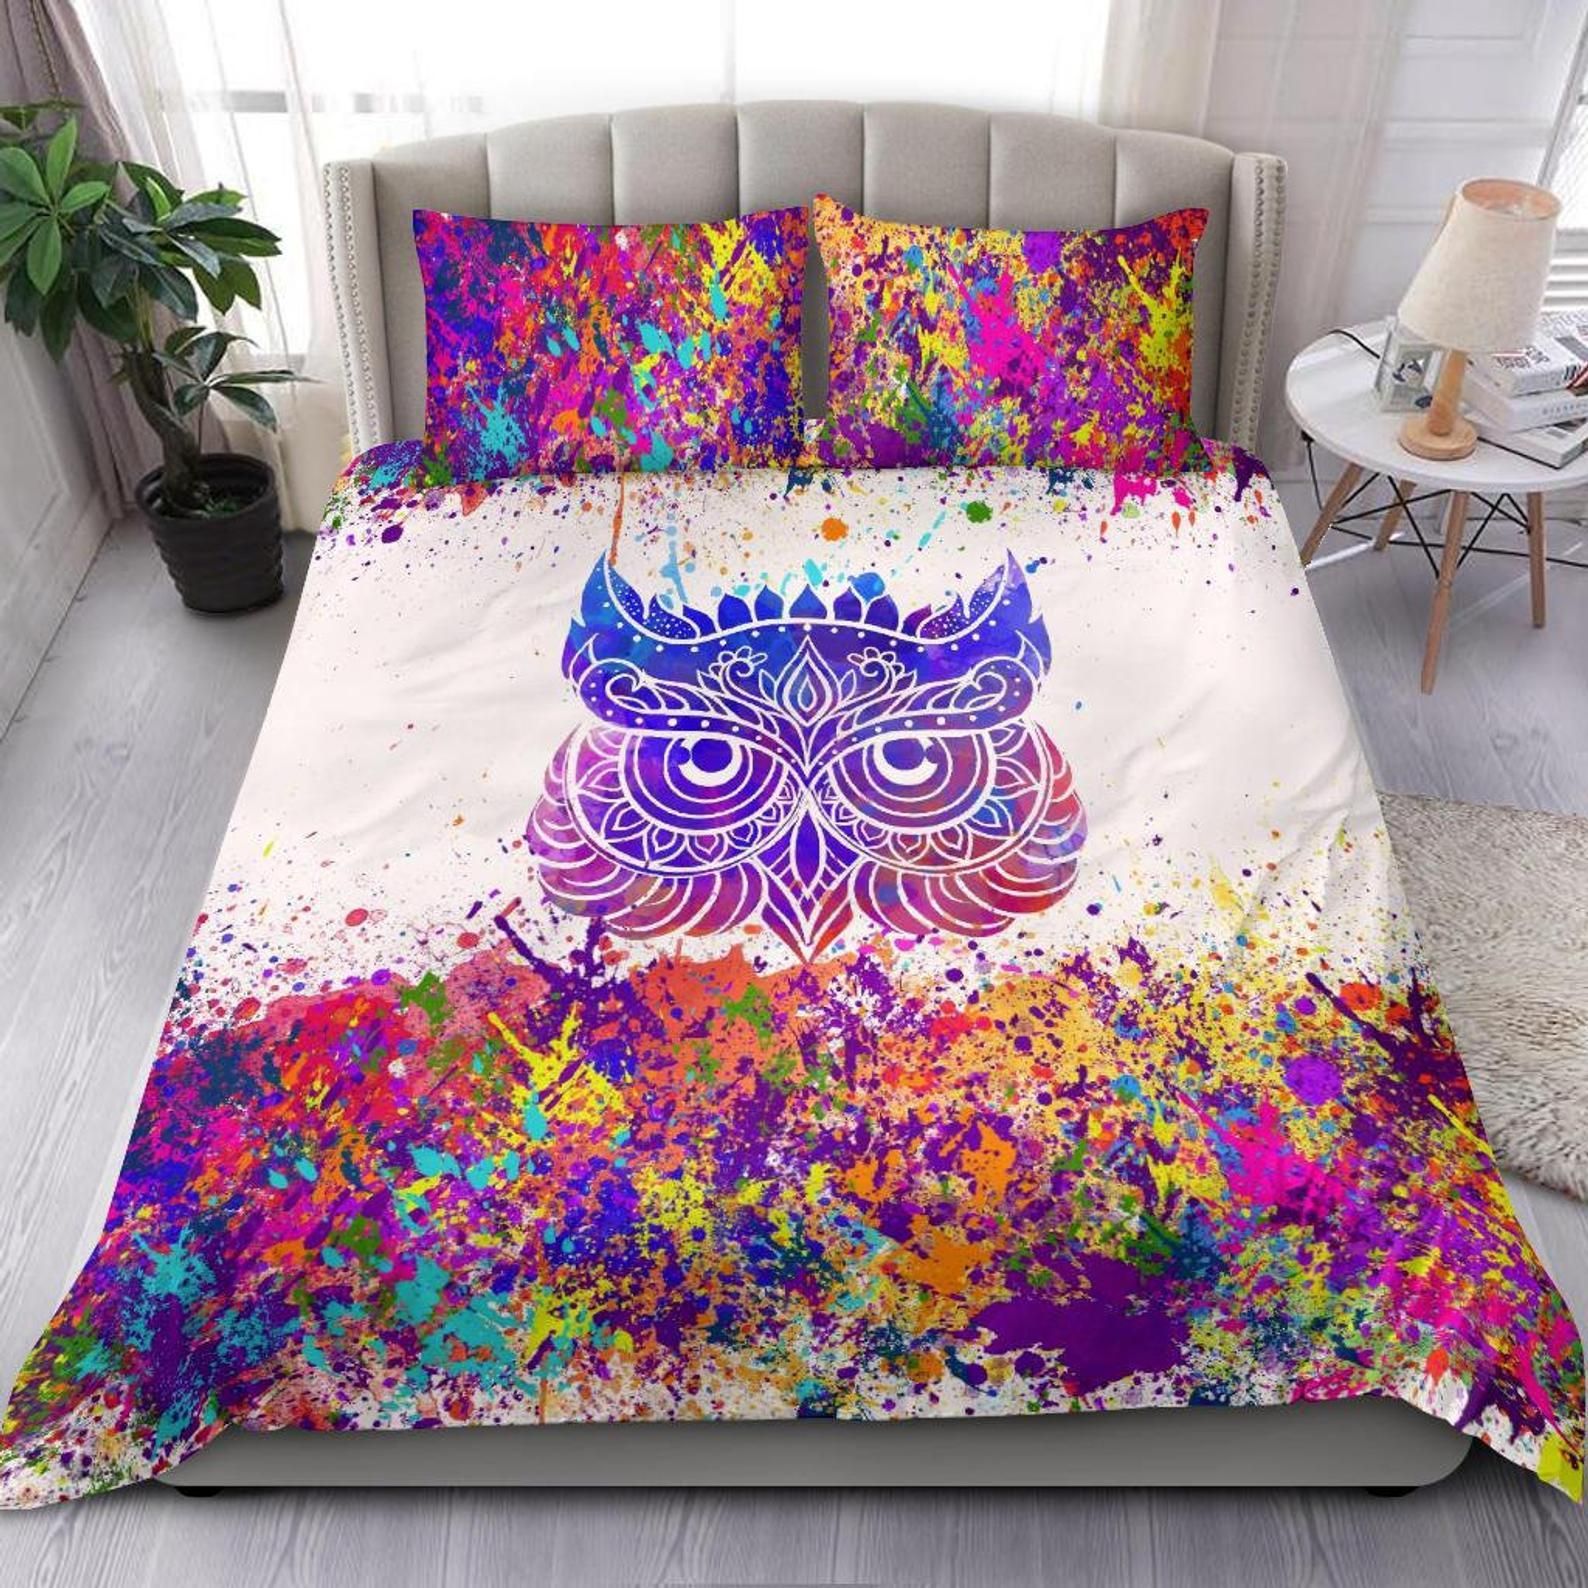 Colorful Owl Bedding Set Cotton Bed Sheets Spread Comforter Duvet Cover Bedding Sets